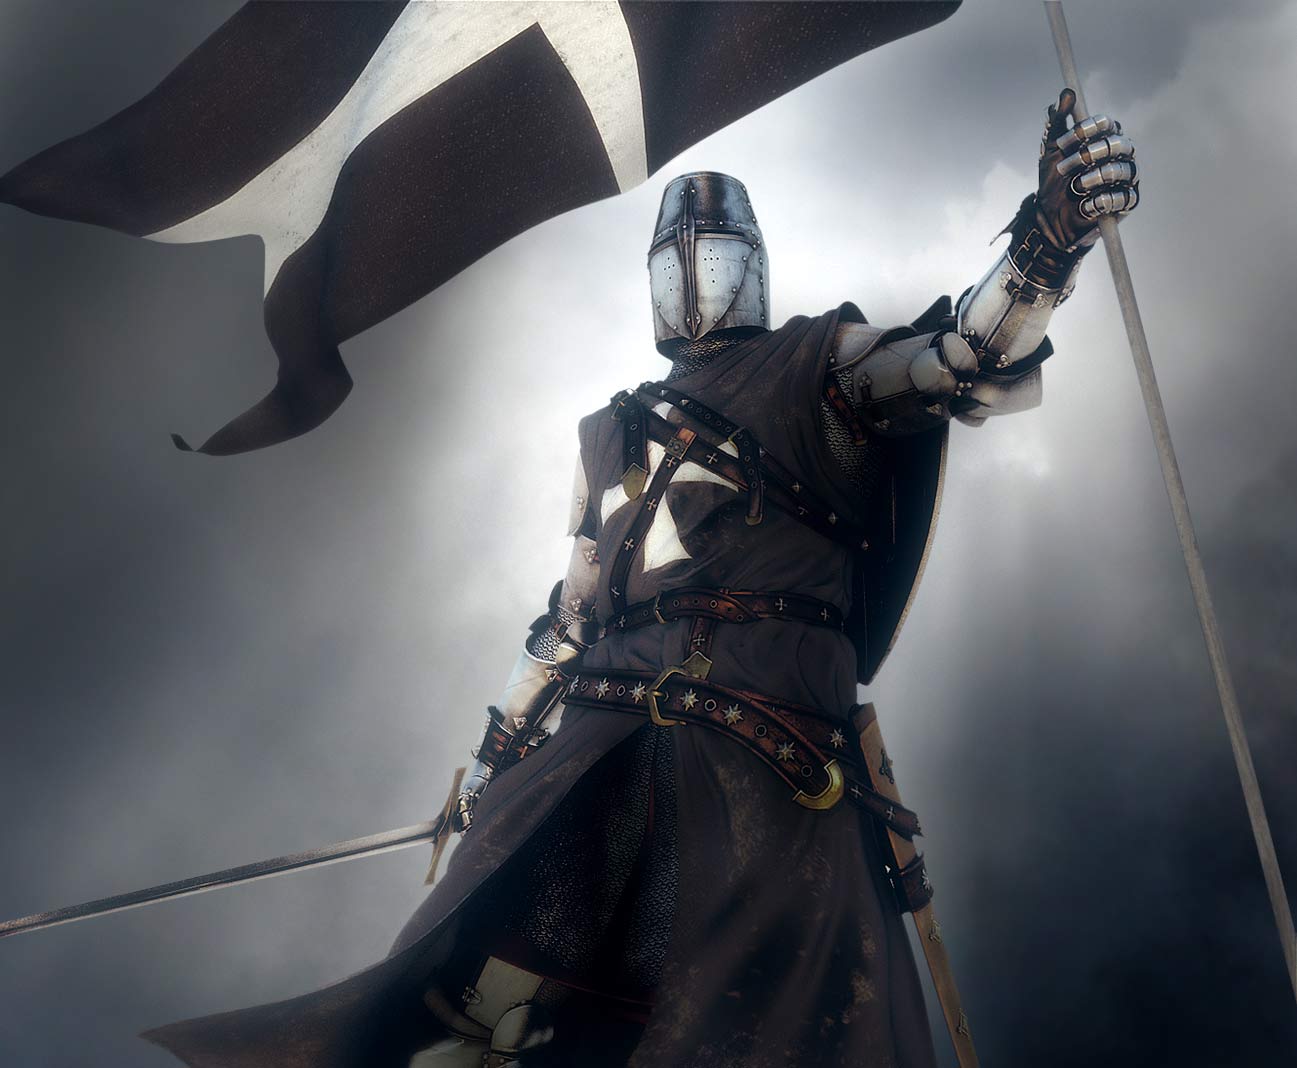 Desktop Wallpaper Diablo 3 Video Game Crusader Armor Warrior Hd Image  Picture Background D0s308